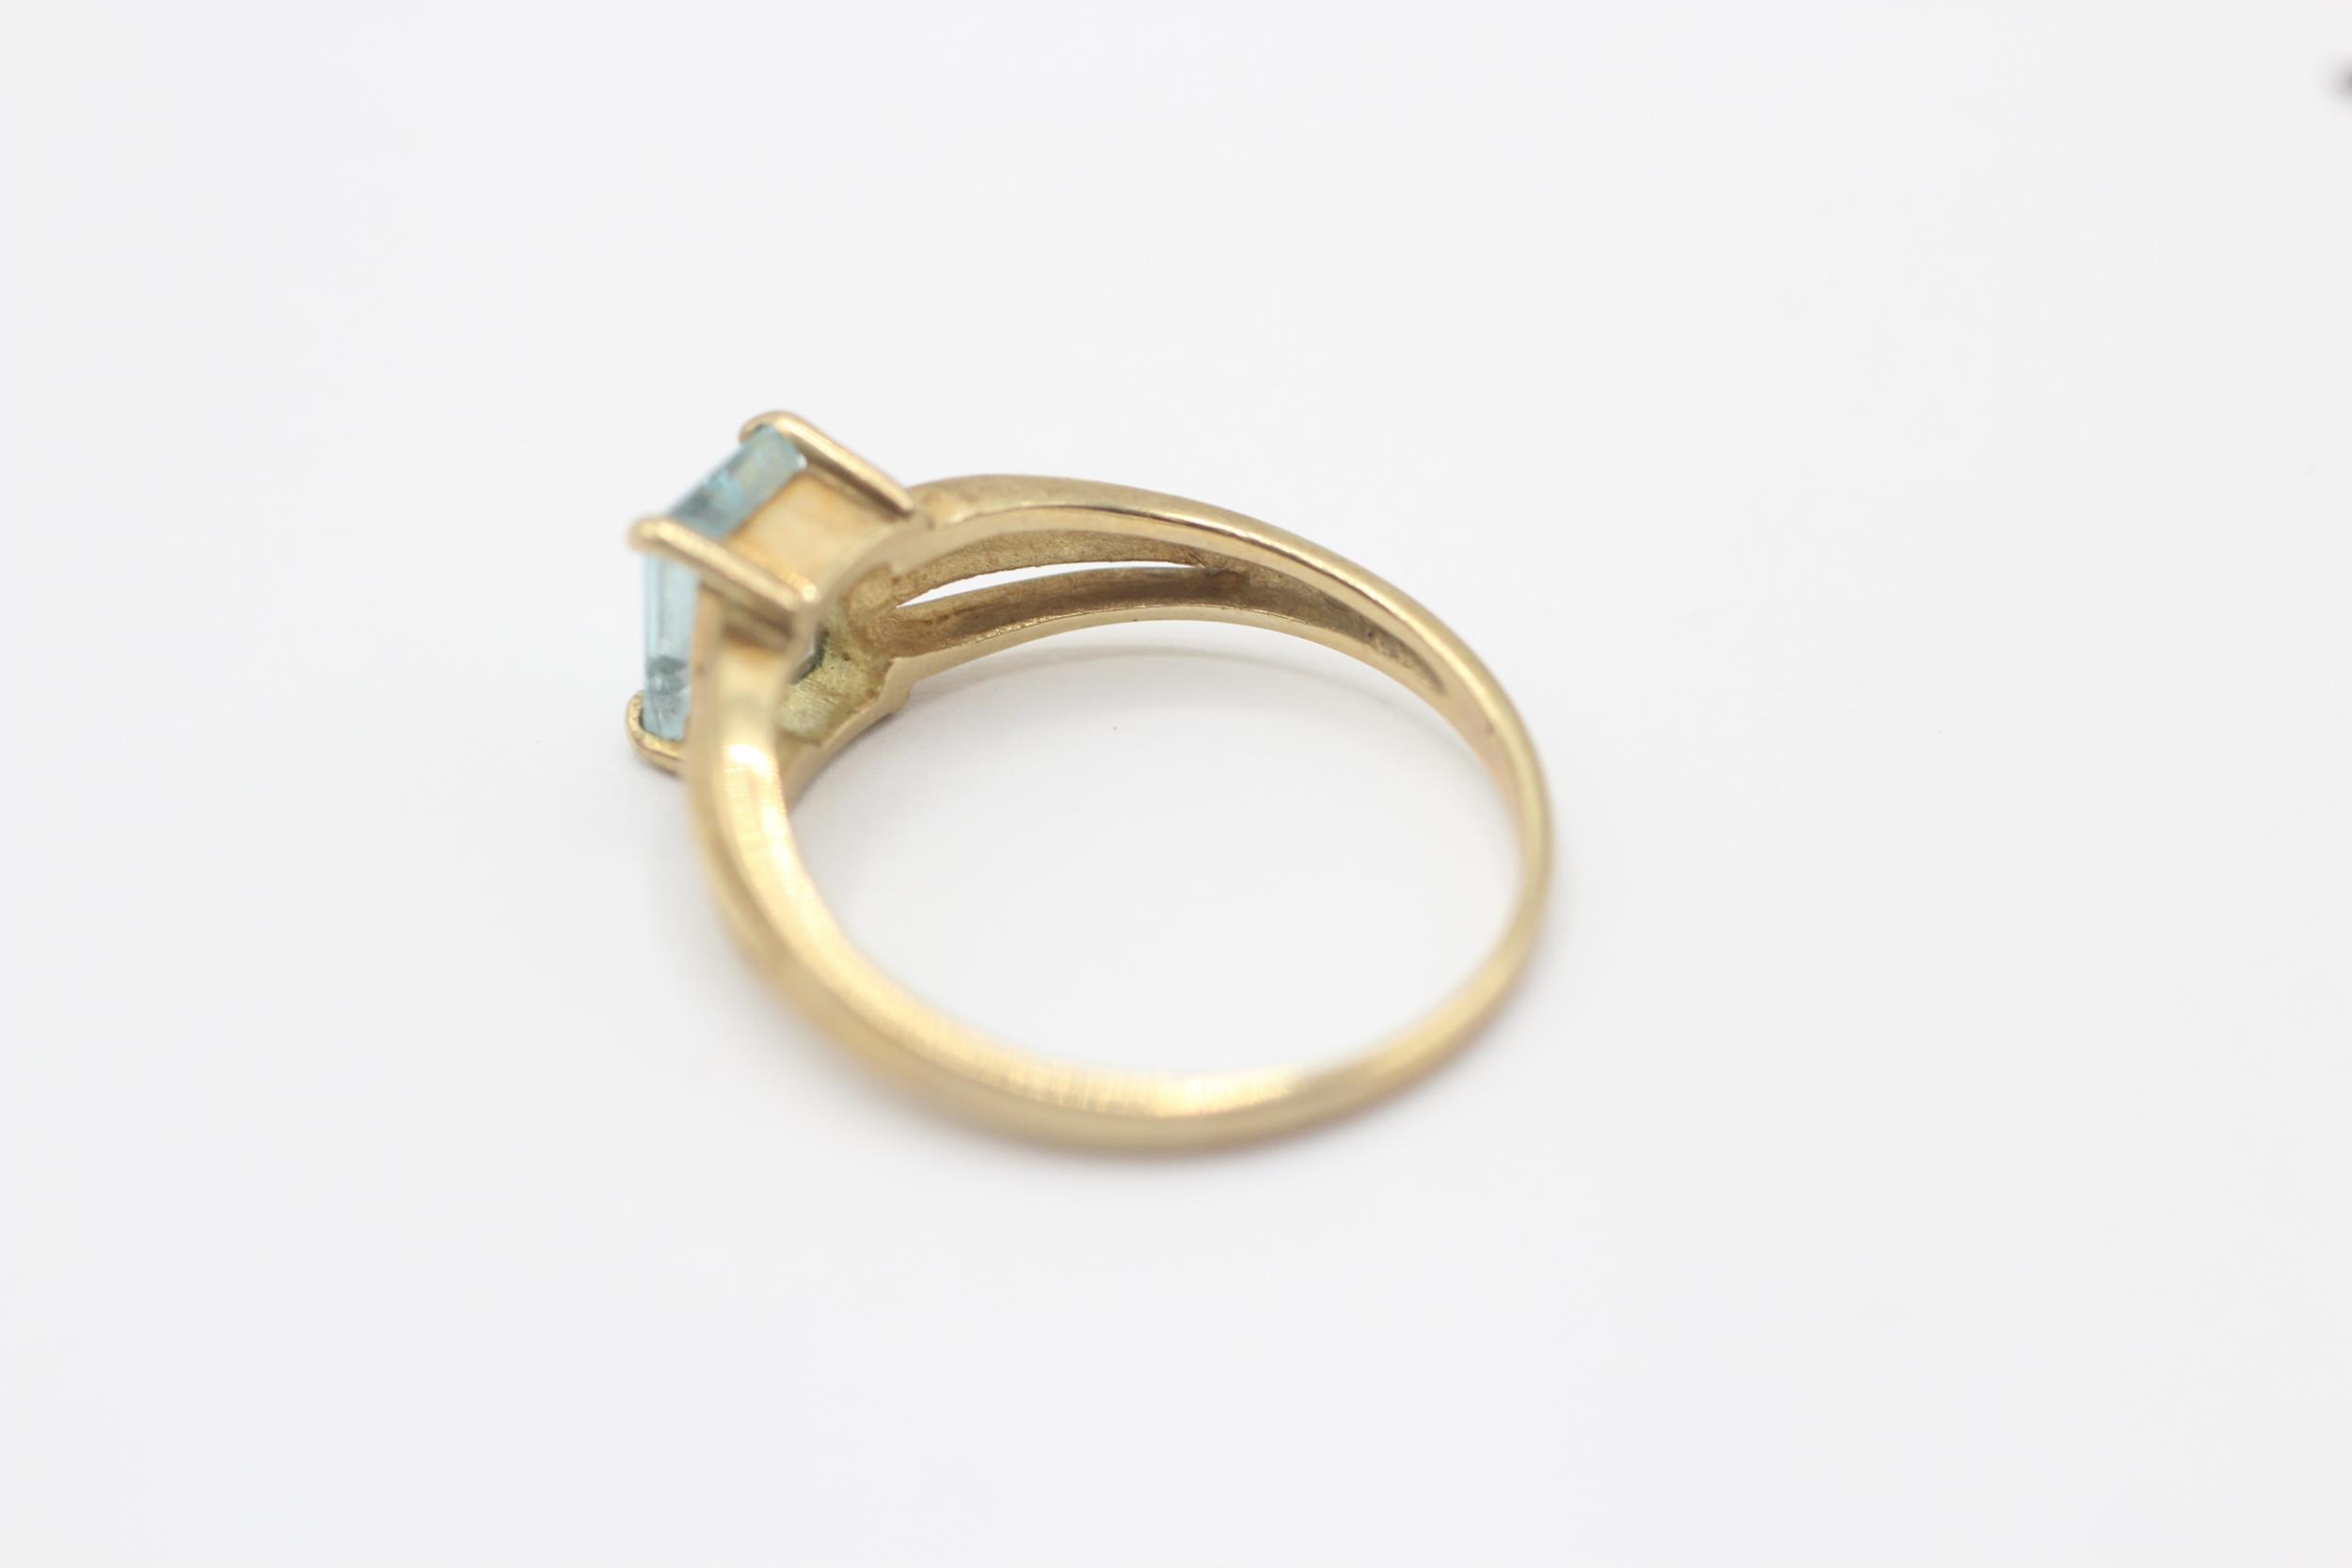 9ct gold rectangle topaz single stone ring Size M 1.8 g - Image 3 of 6